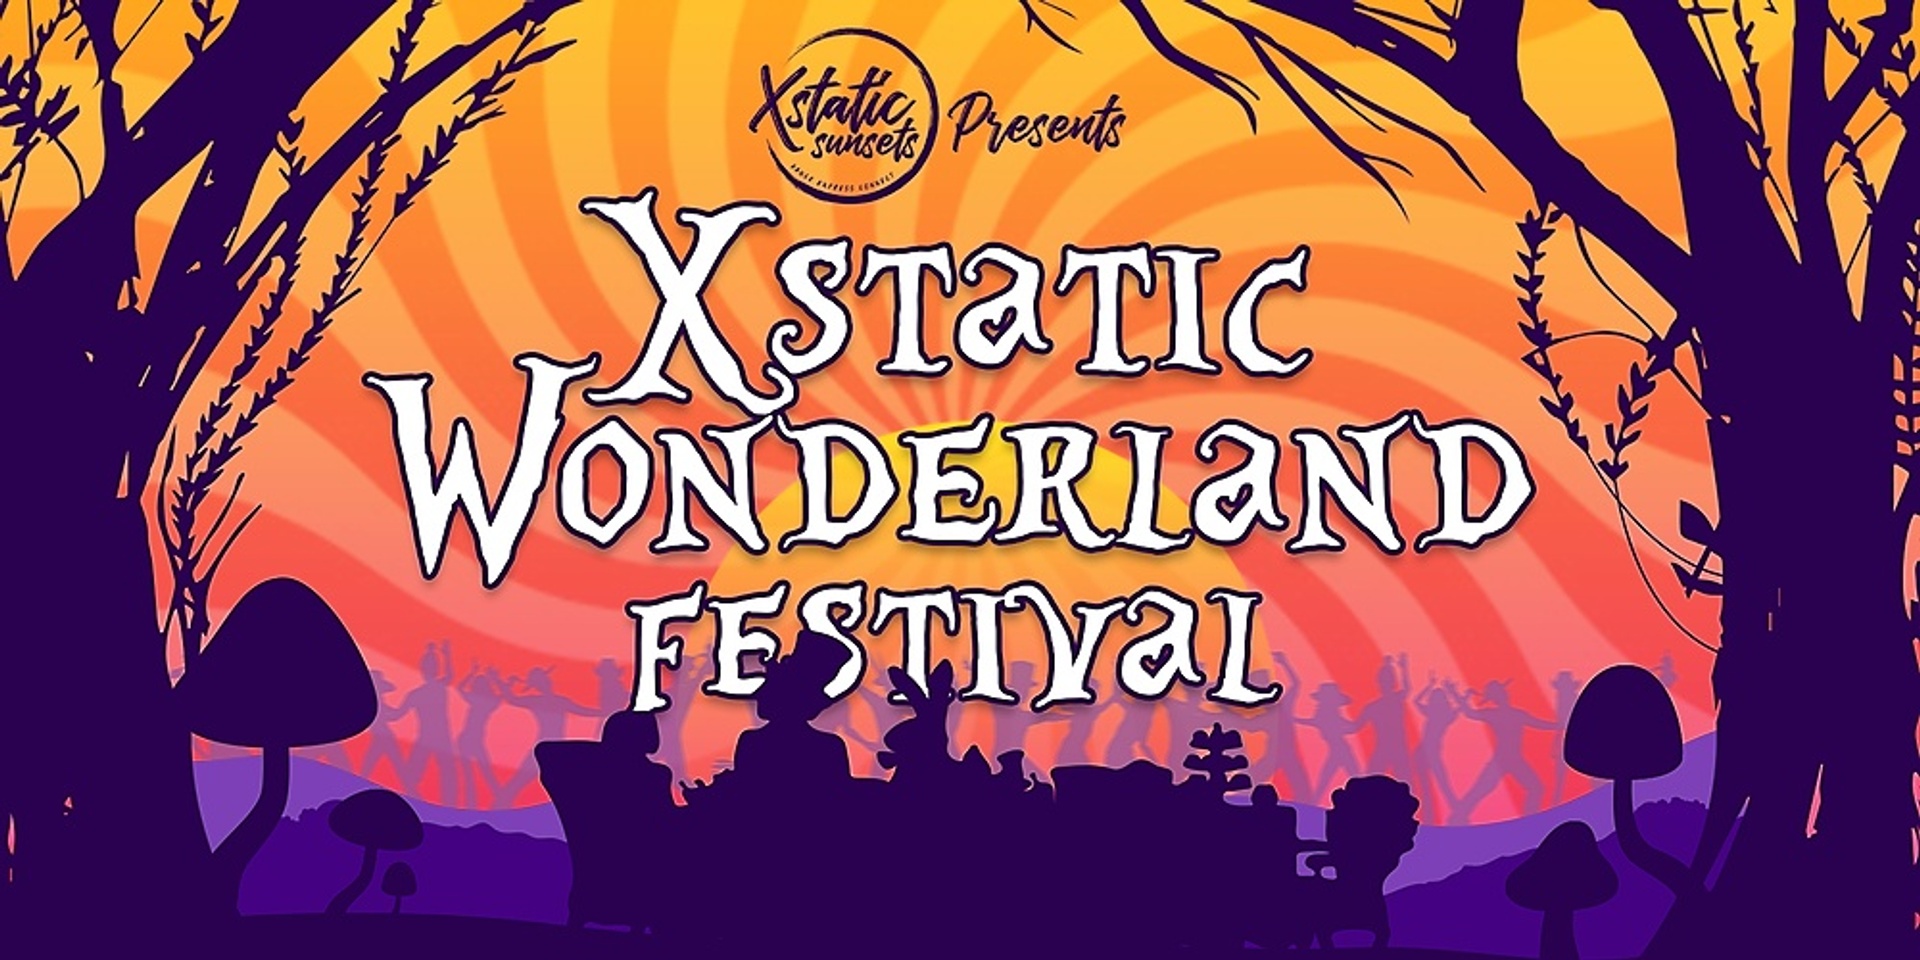 Xstatic Wonderland Festival - Mad Hatters Tea Party Meets Music & Arts Festival